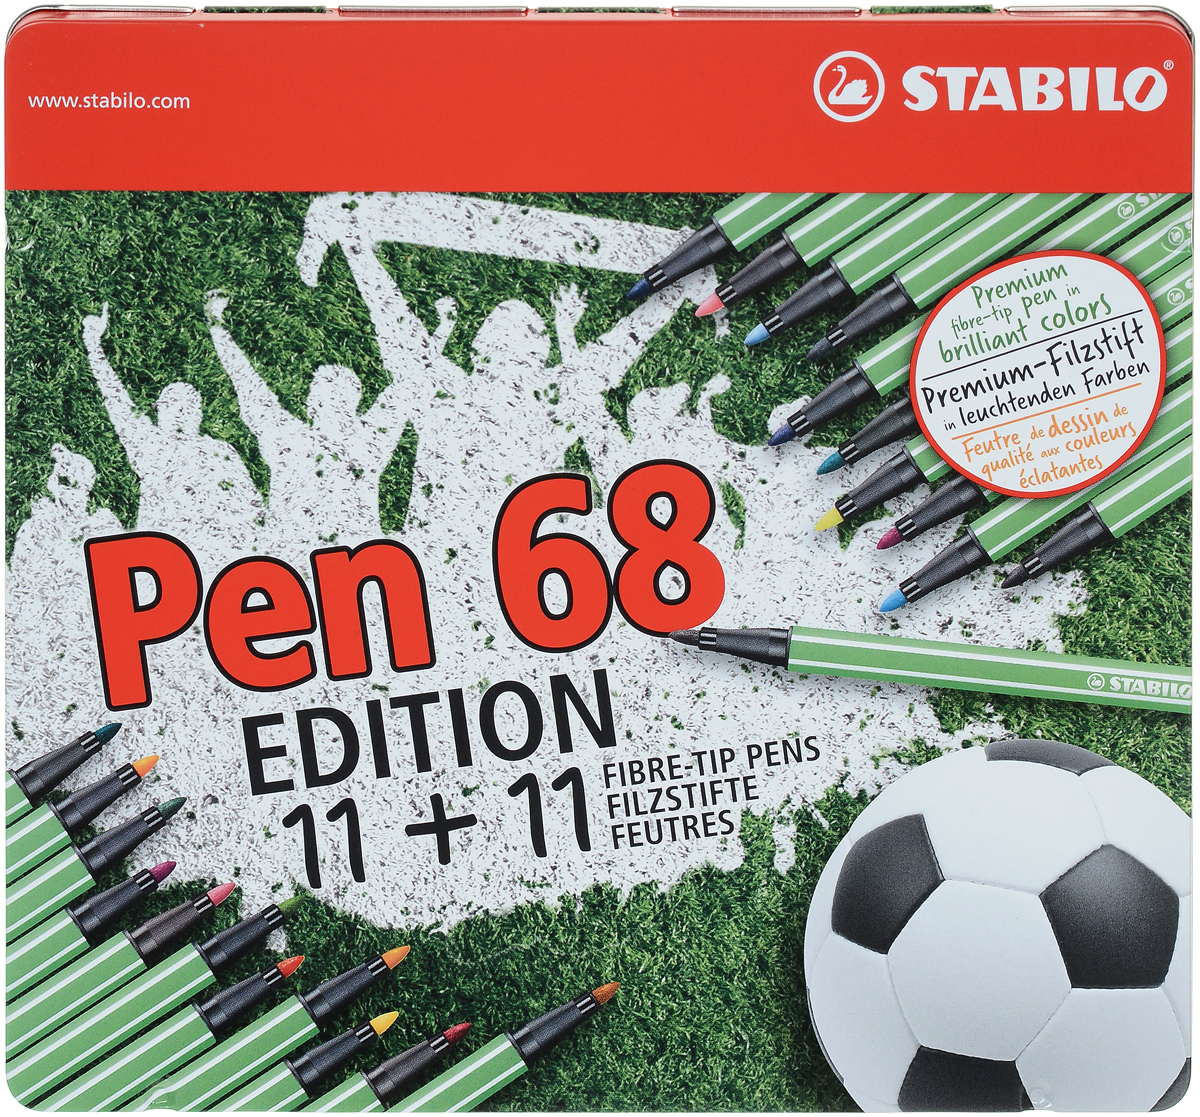 STABILO Набор фломастеров Pen 68 Green Editional 22 цвета